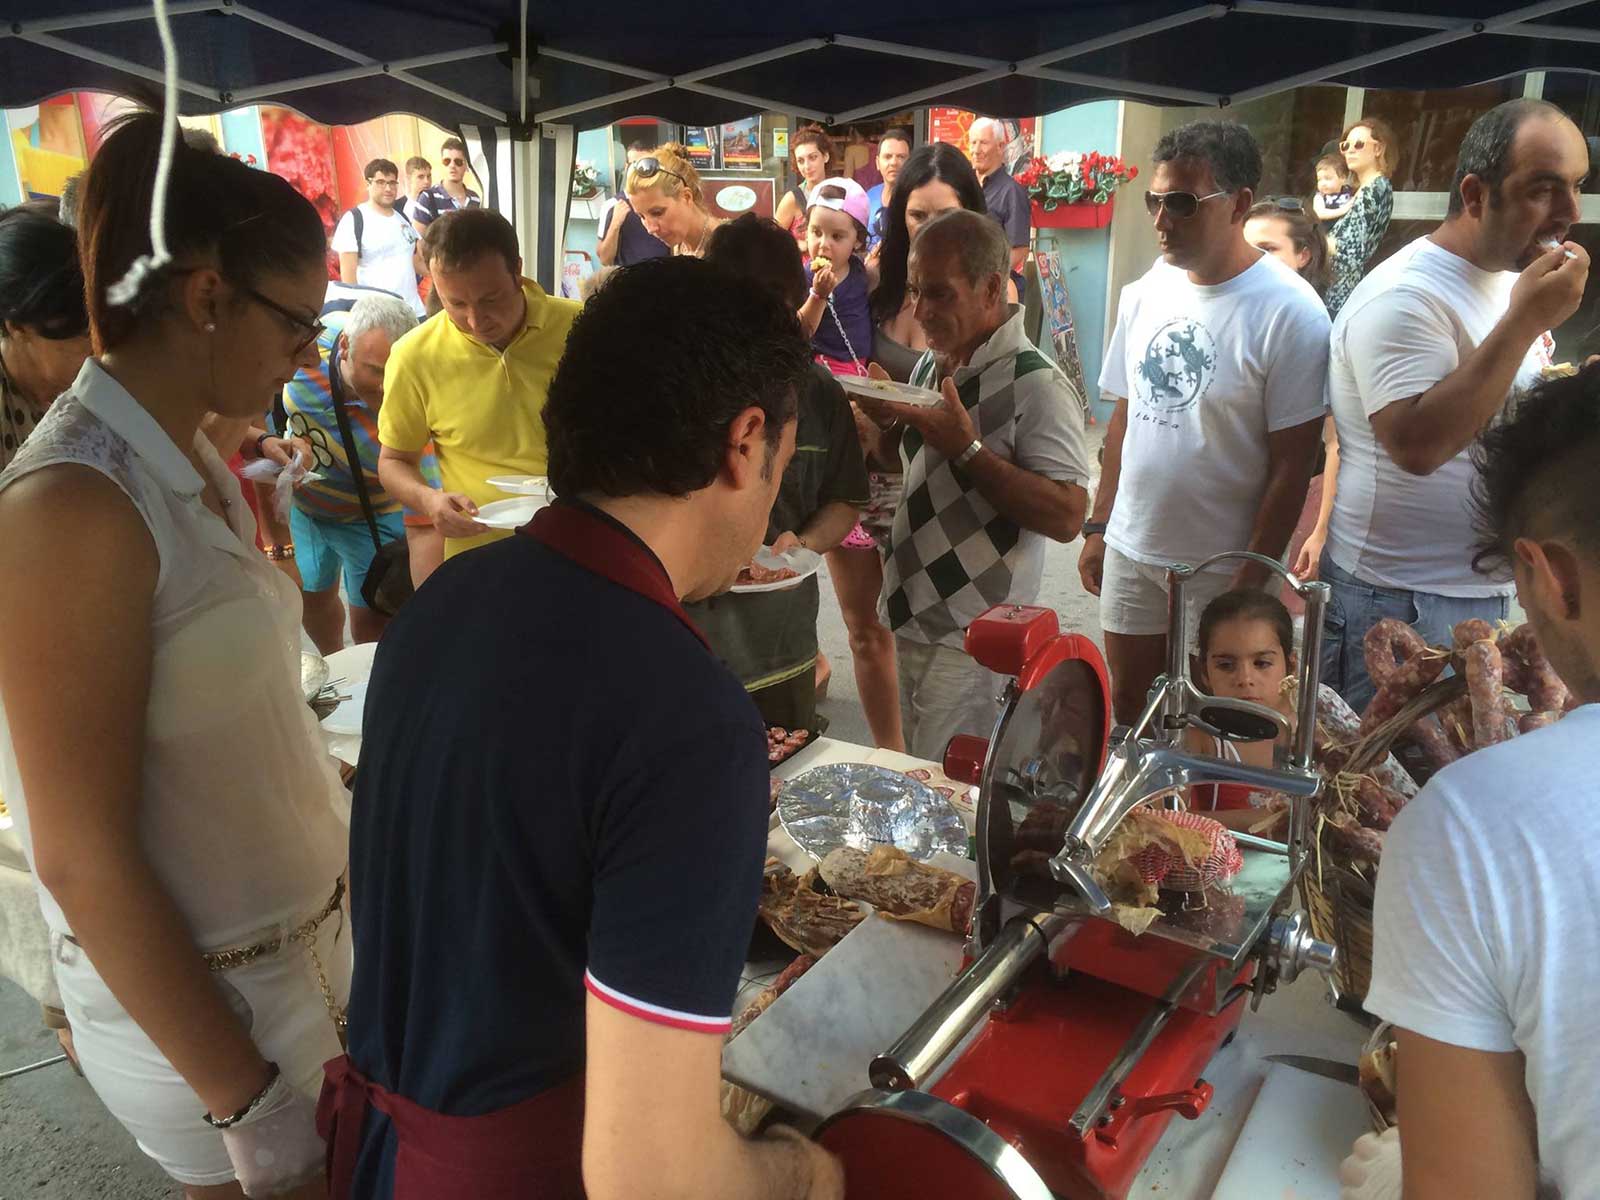 Street Food Festival in Cefalu - 29 August 2015